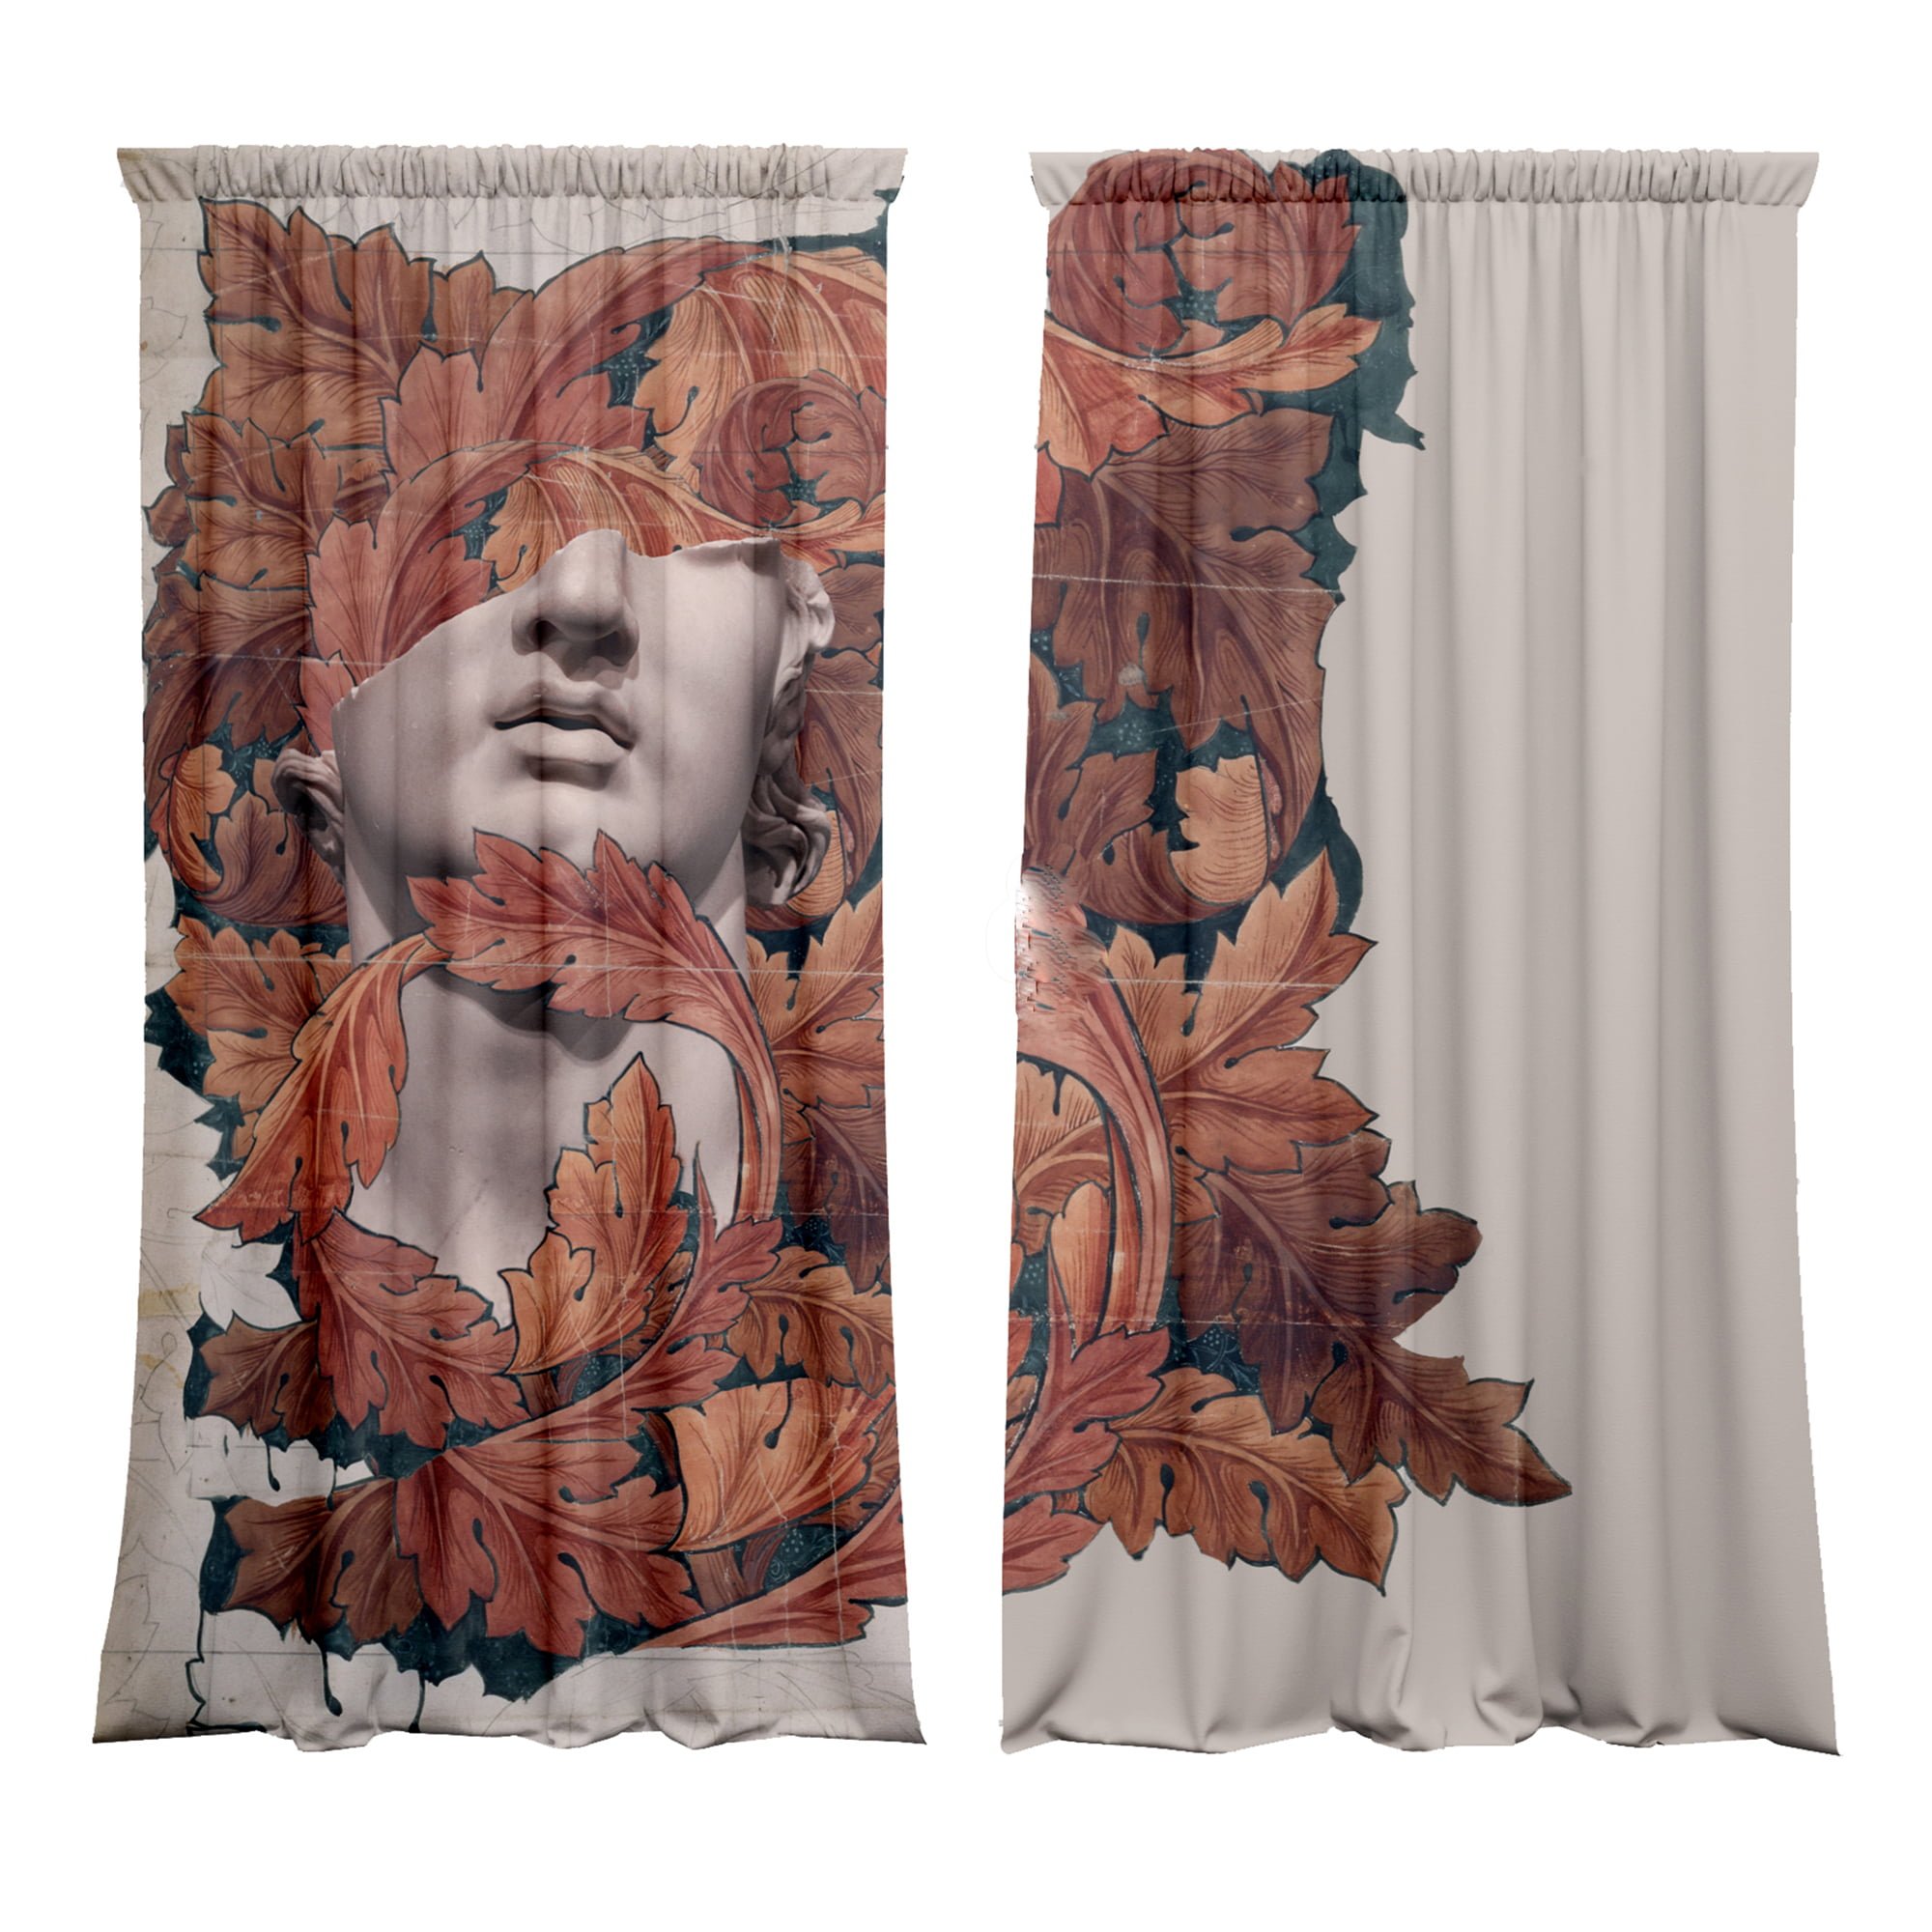 abstract_curtains_zaslony_kotary_sowe_sculpture_rzezba_dawid_michal_aniol_sculpture_met